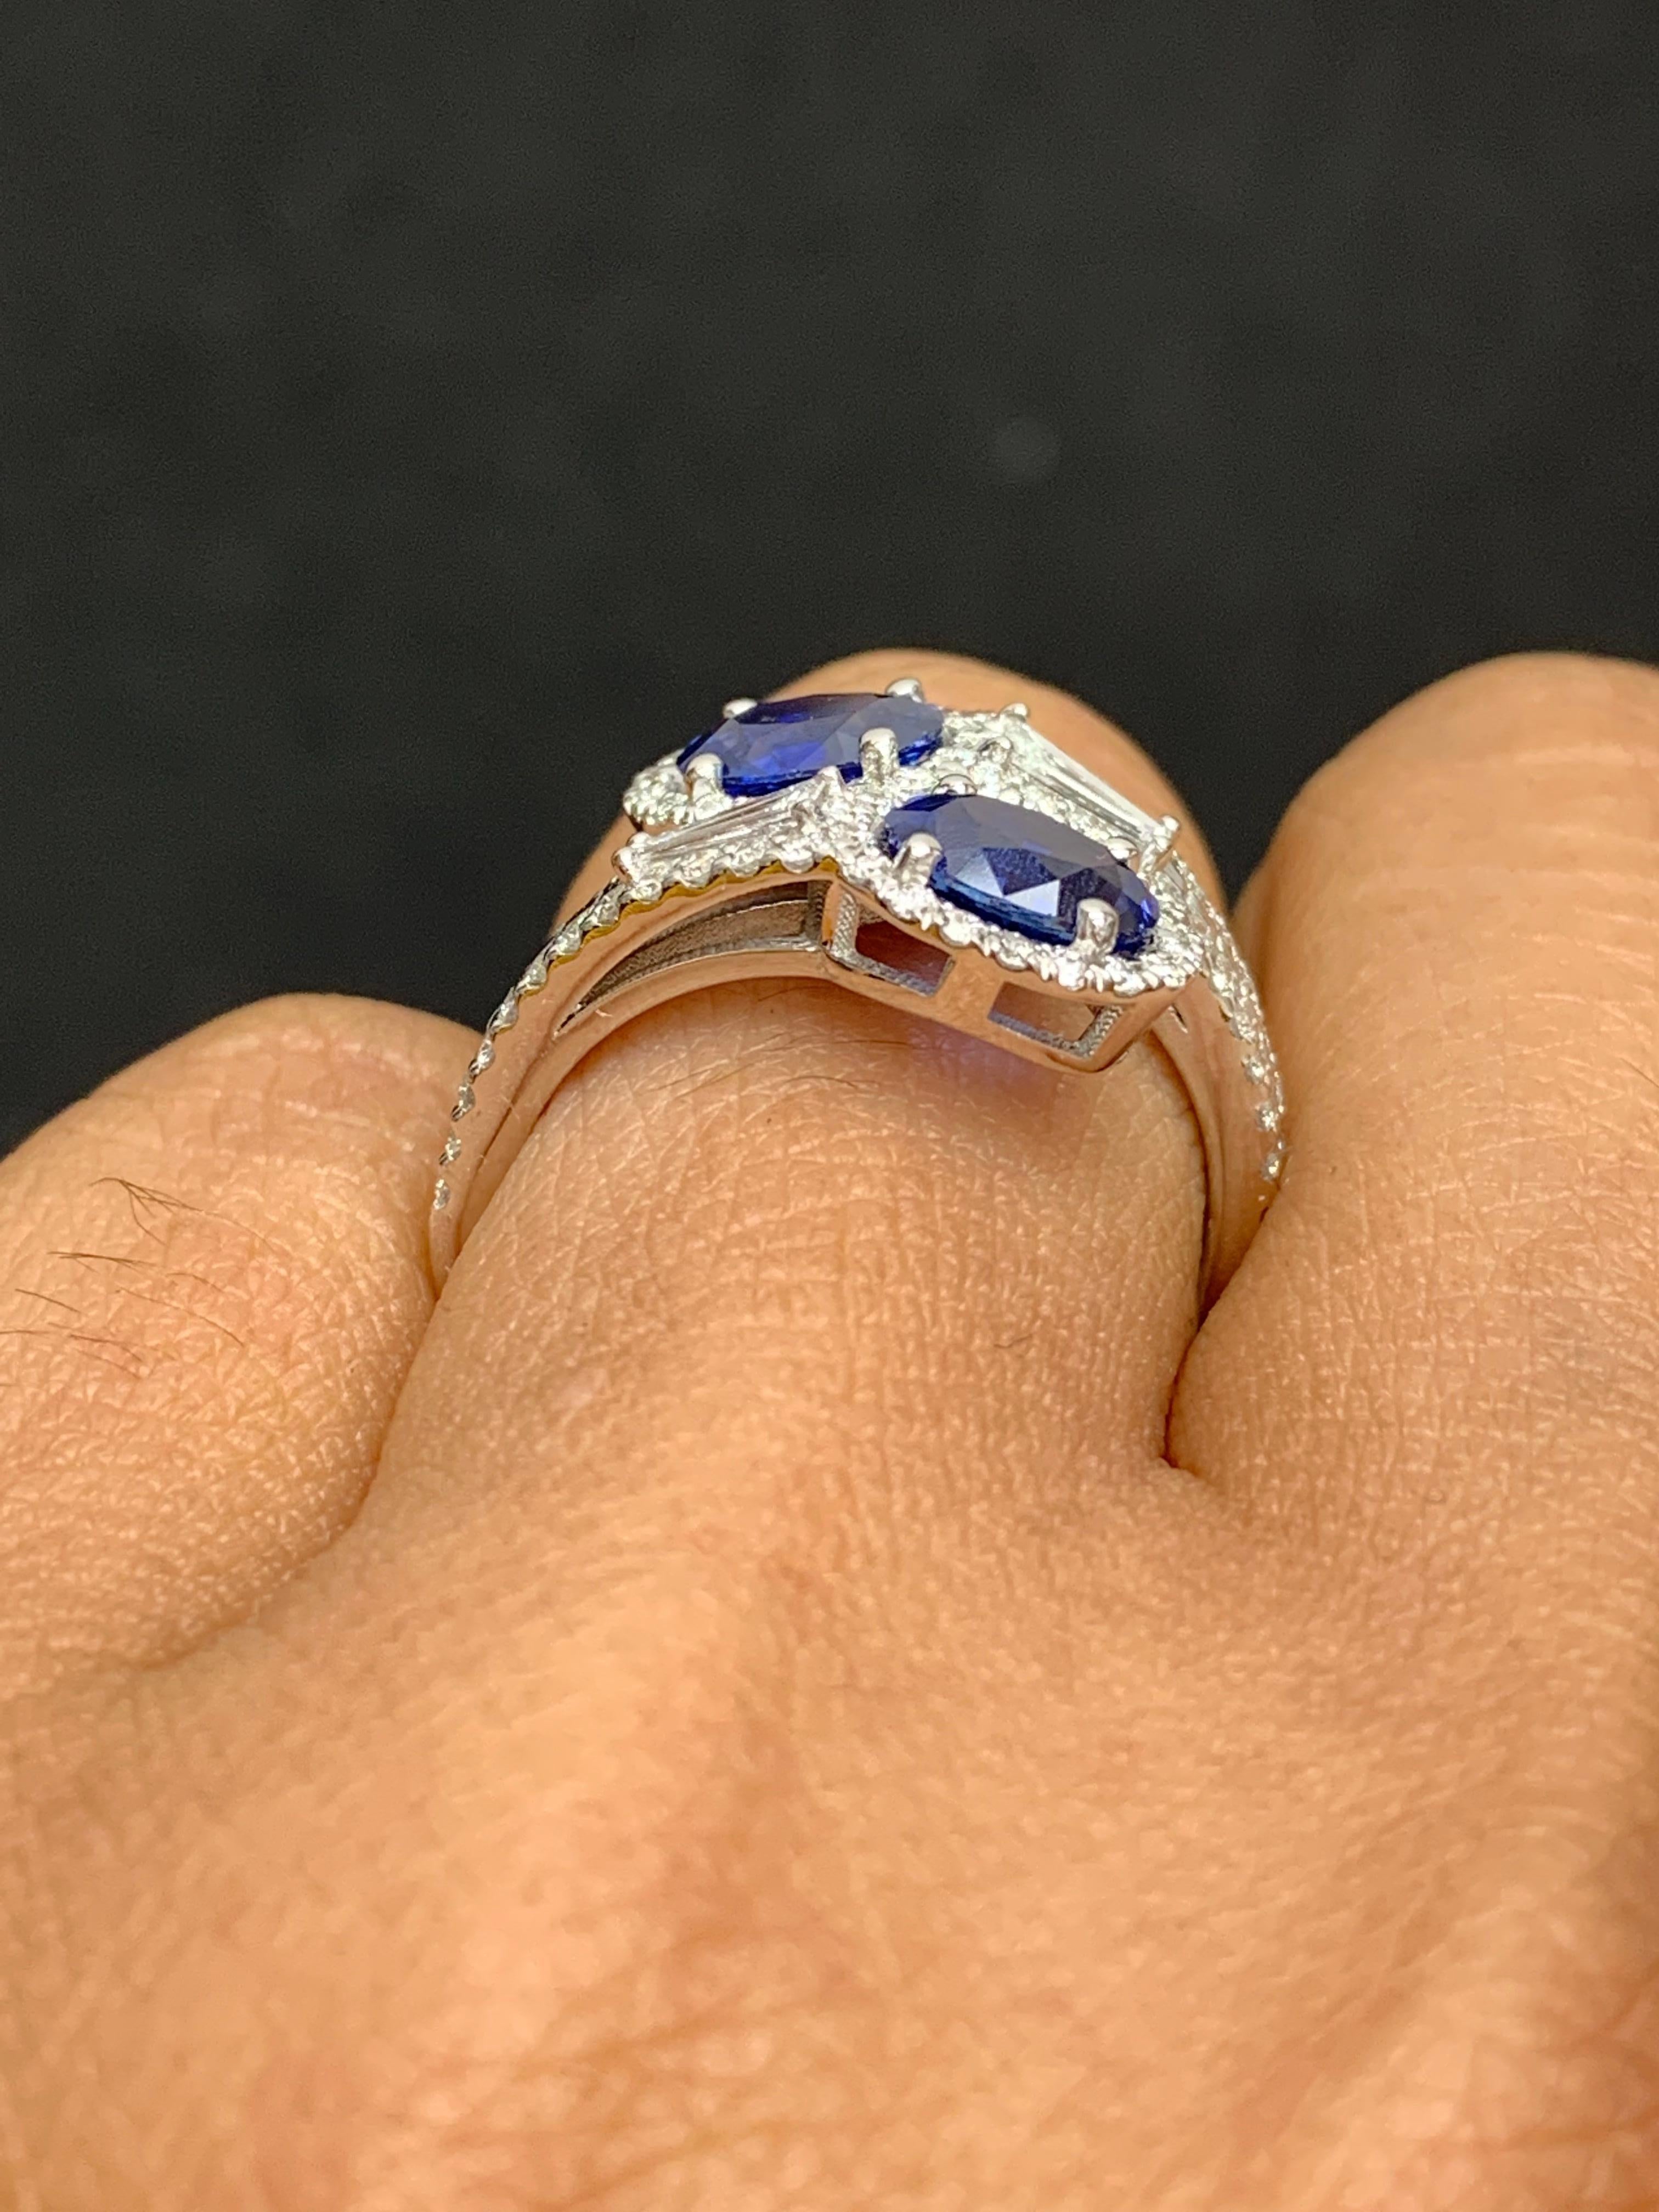 1.81 Carat Oval Cut Sapphire Diamond Toi Et Moi Engagement Ring 14K White Gold For Sale 3